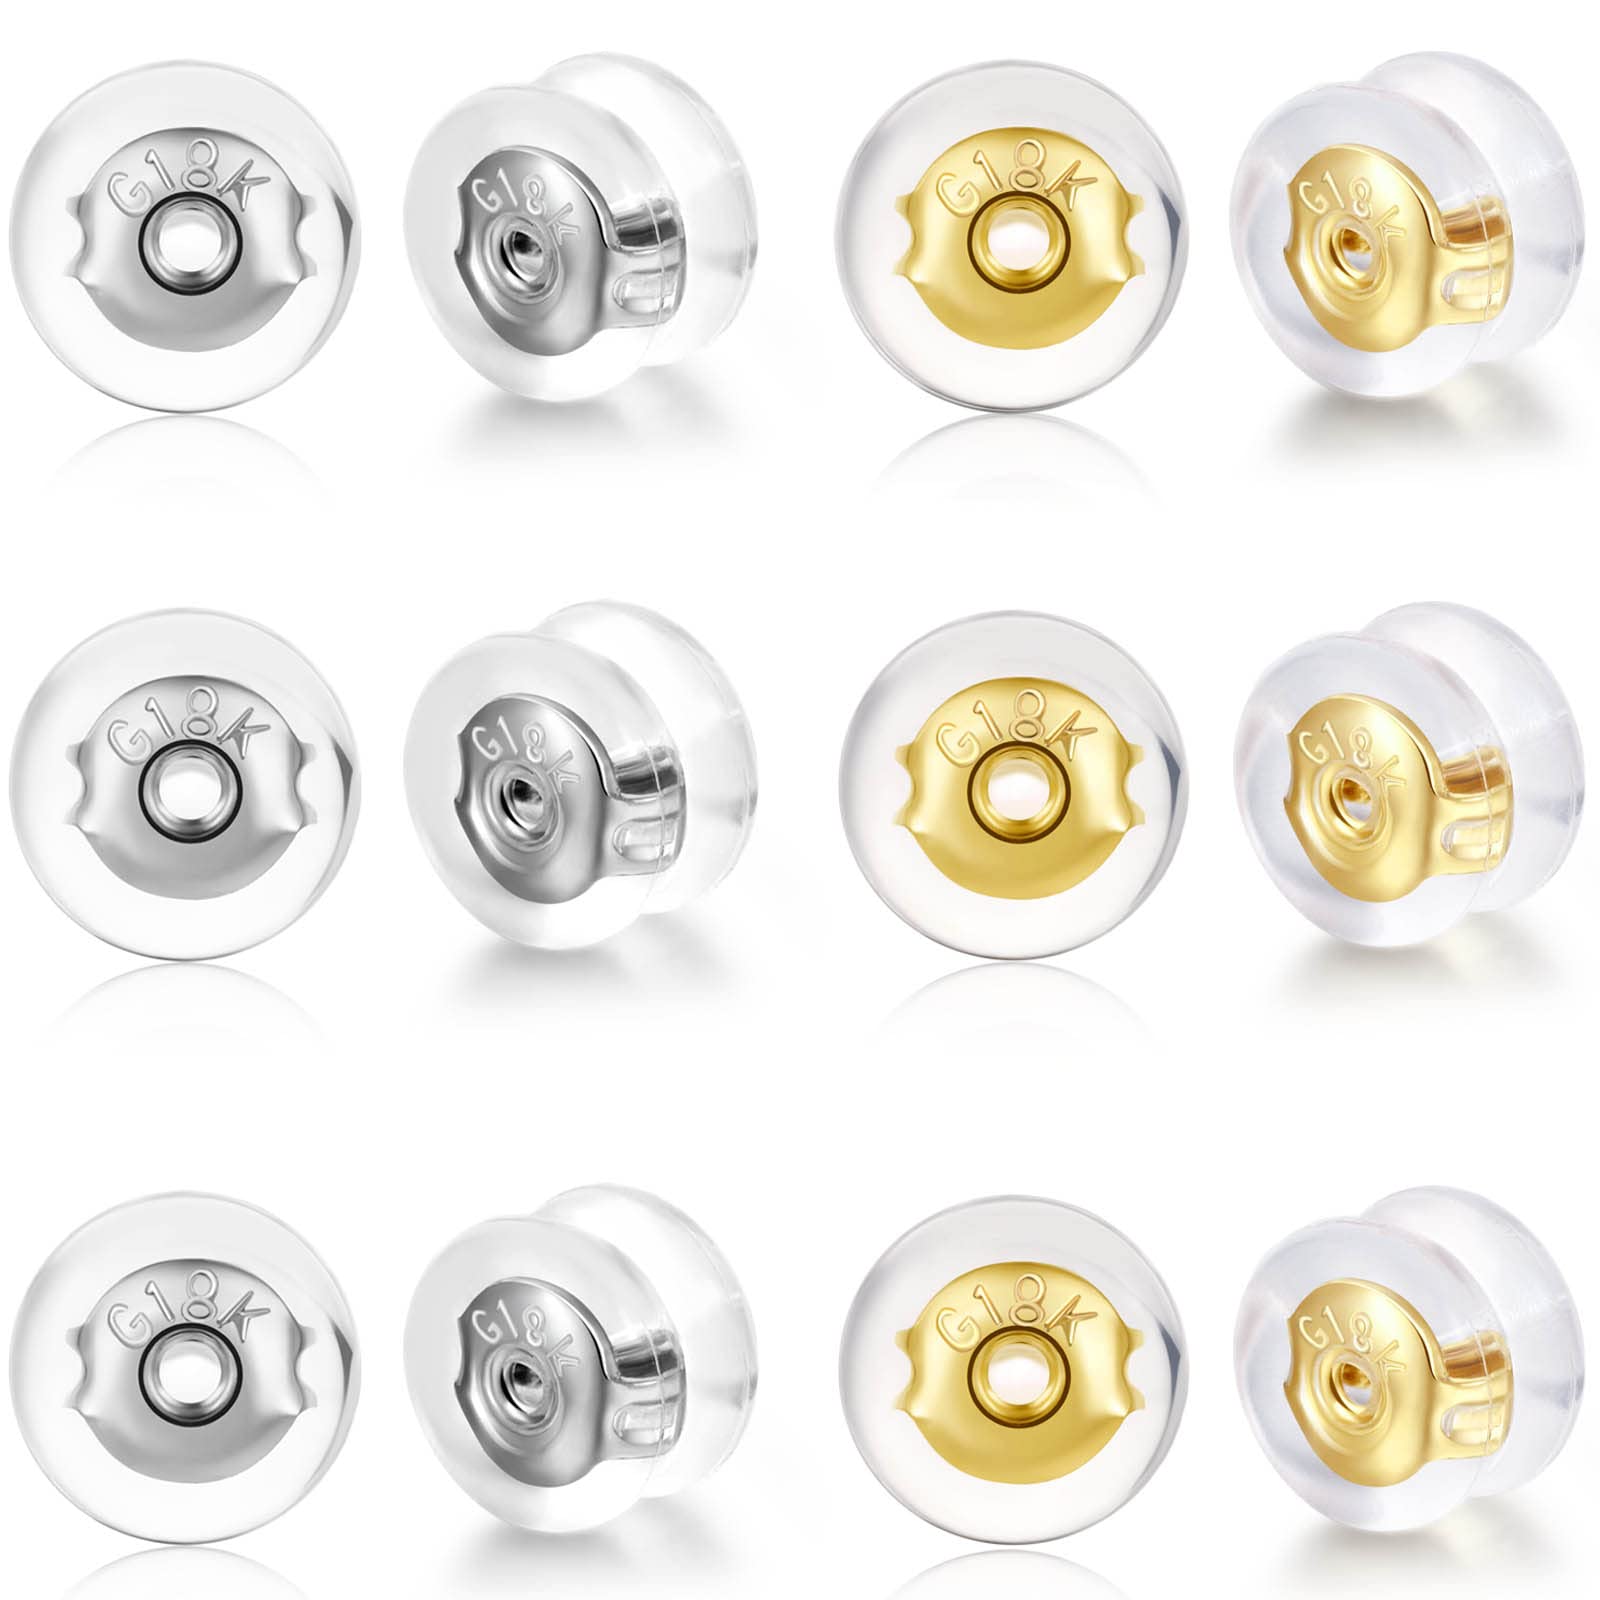 Moconar Earring Backs,14K Gold Silicone Earring Backs for Studs/Droopy Ears,Locking Secure Earring Backs for Heavy Earring,No Irritate Hypoallergenice Soft Clear Earring Backs for Adults&Kids